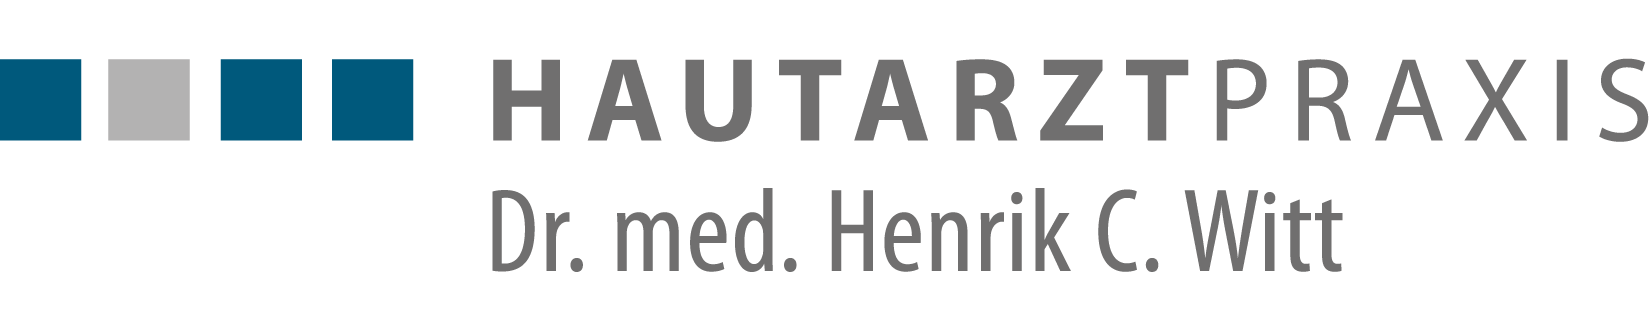 Logo: Hautarztpraxis Dr. med. Henrik C. Witt